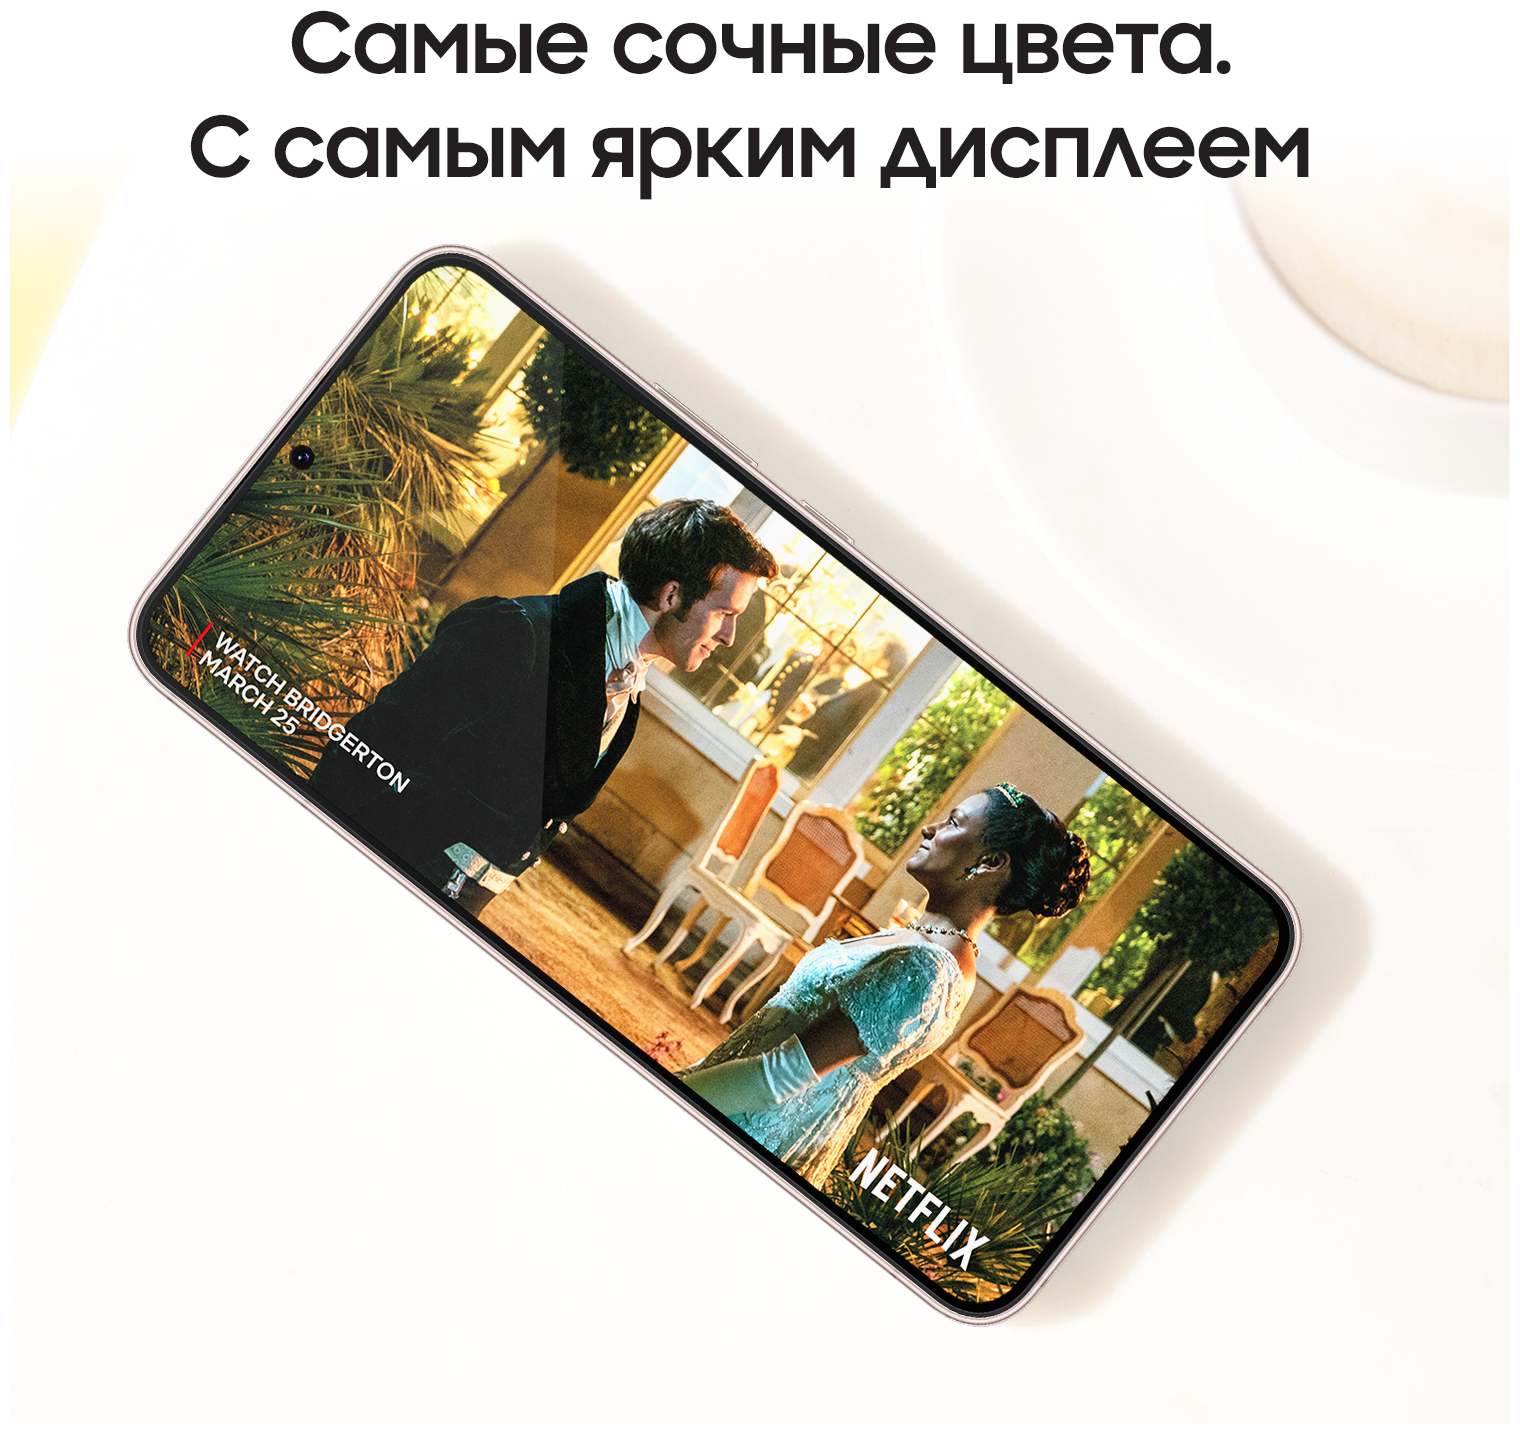 Samsung galaxy a8 (2018). обзор характеристик смартфона / itcrumbs.ru